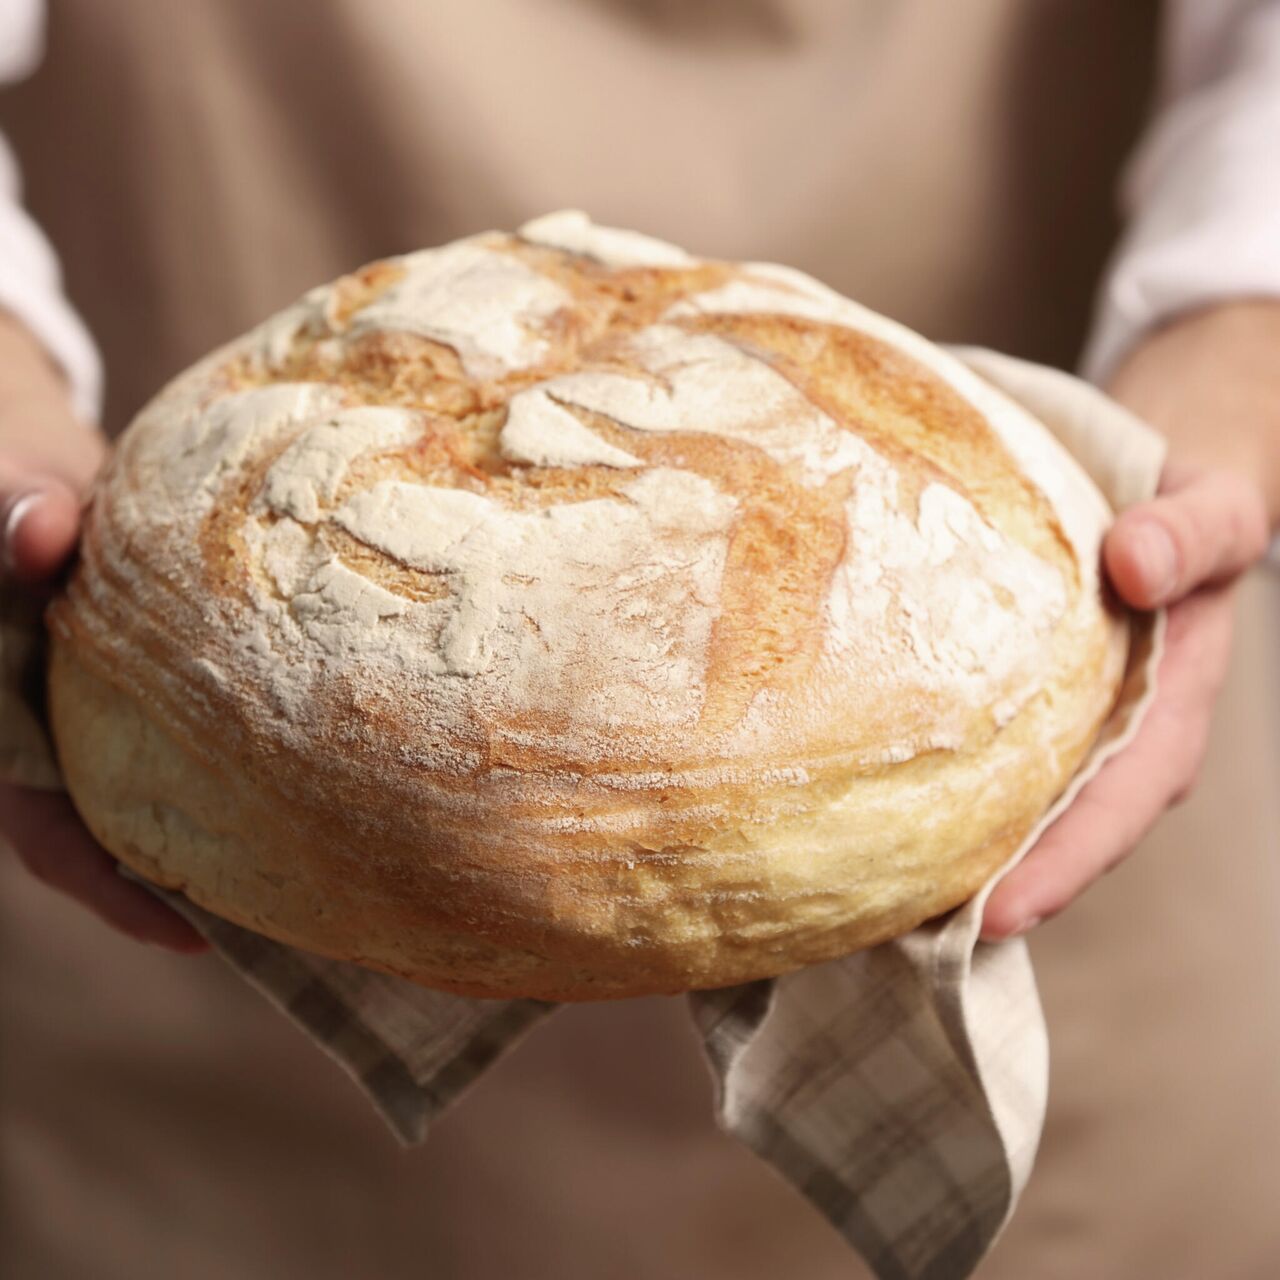 Домашний хлеб - рецепты